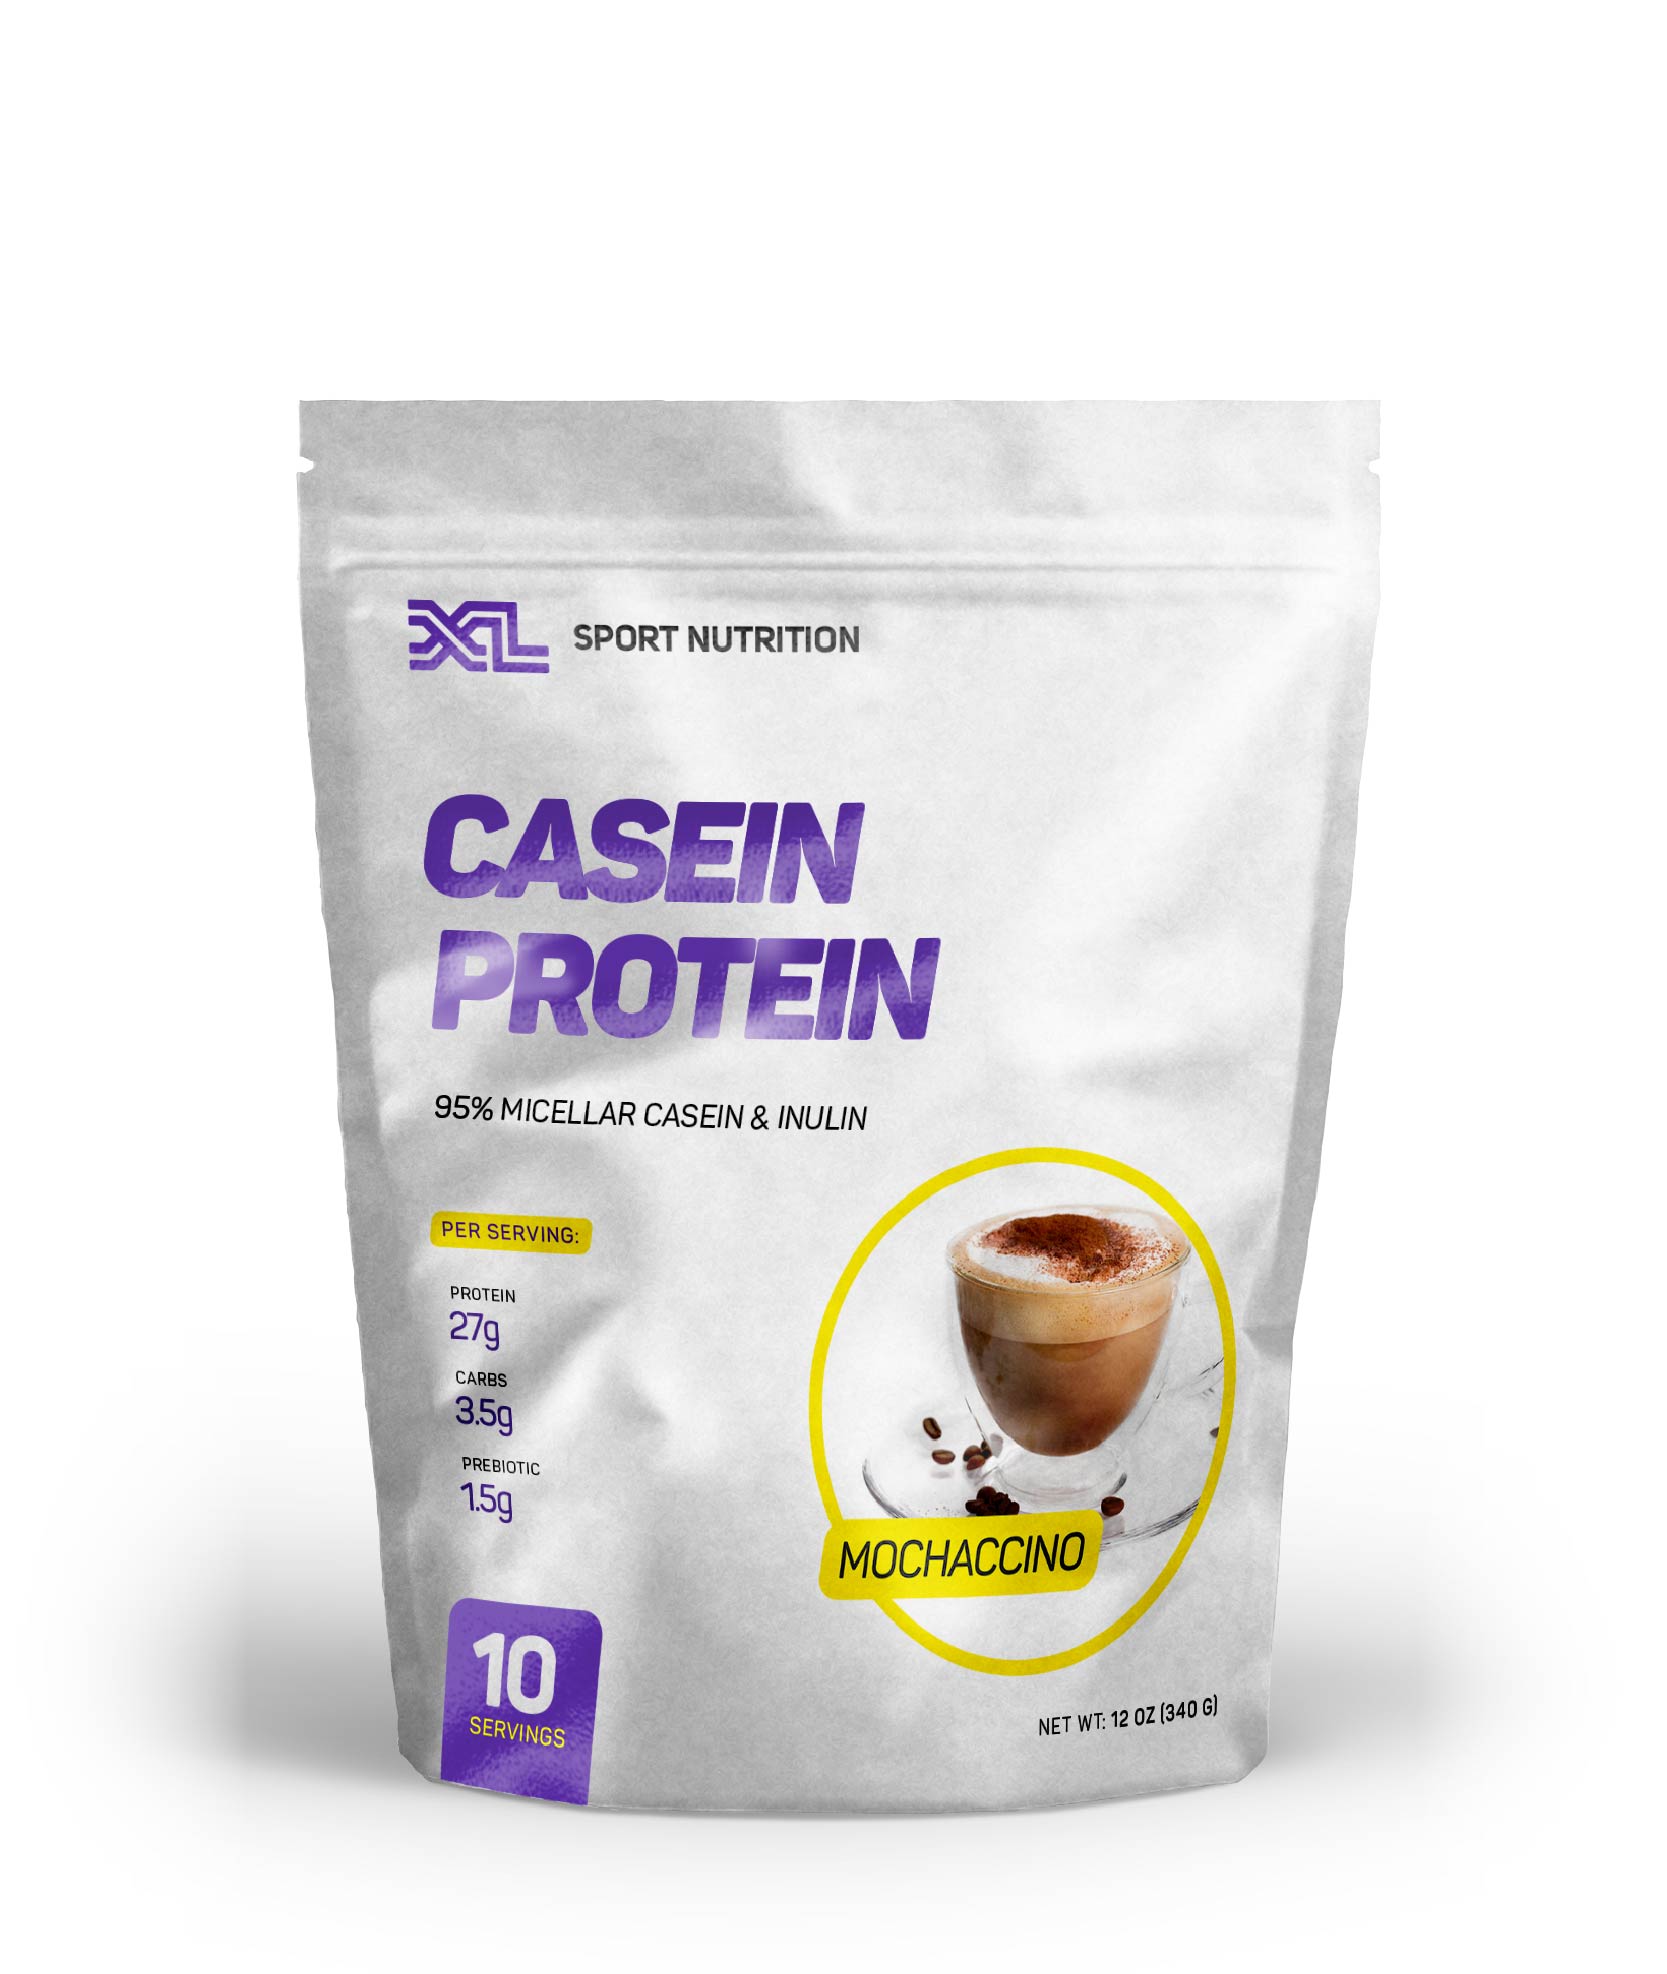 The basic component of XL Casein Protein is micellar casein. 